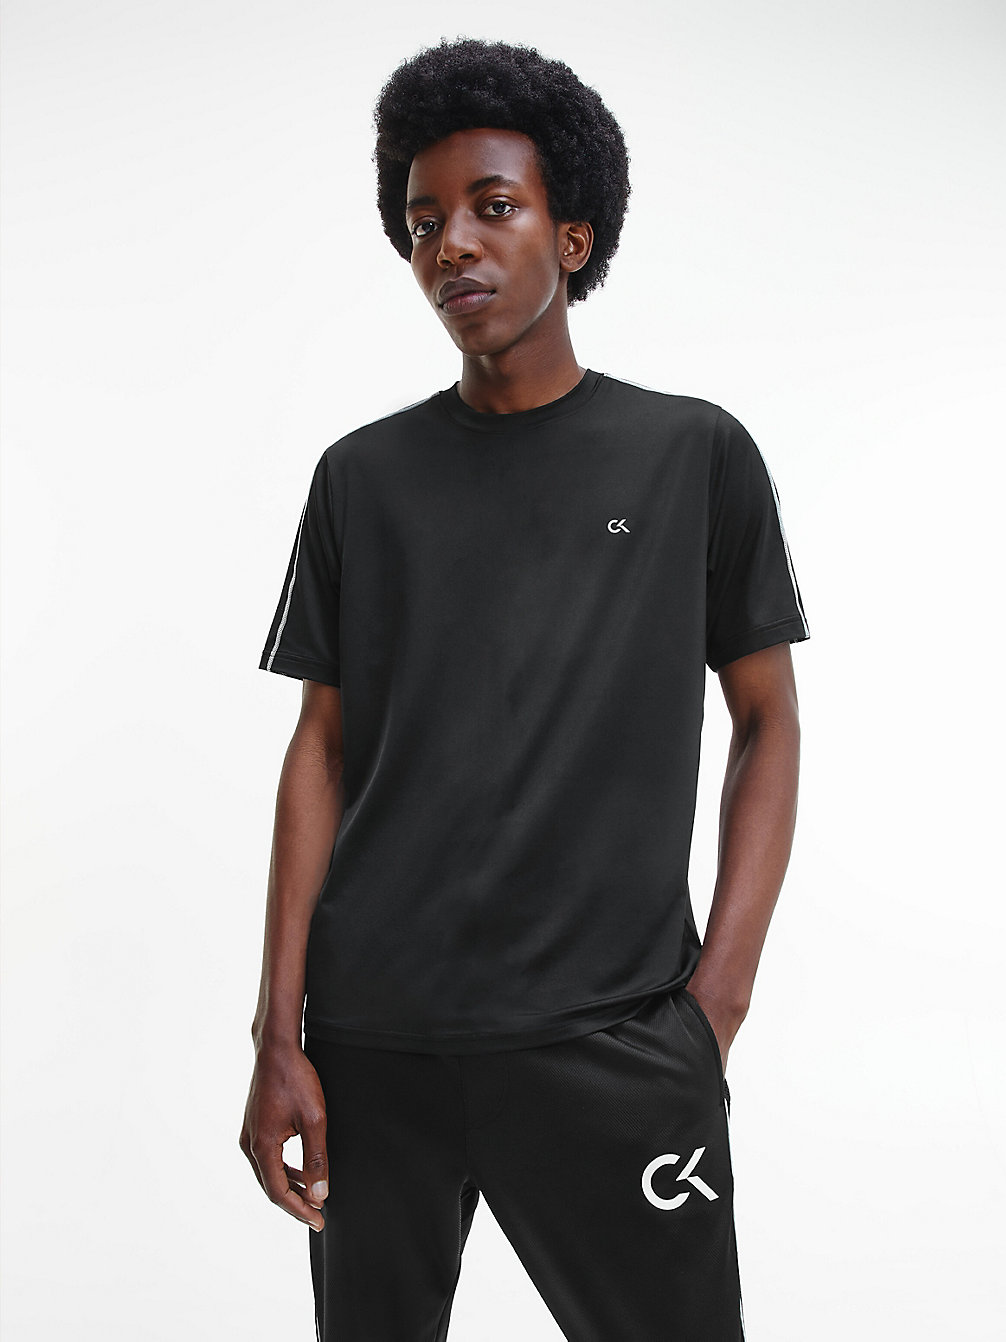 CK BLACK/BRIGHT WHITE Recycled Polyester Gym T-Shirt undefined men Calvin Klein